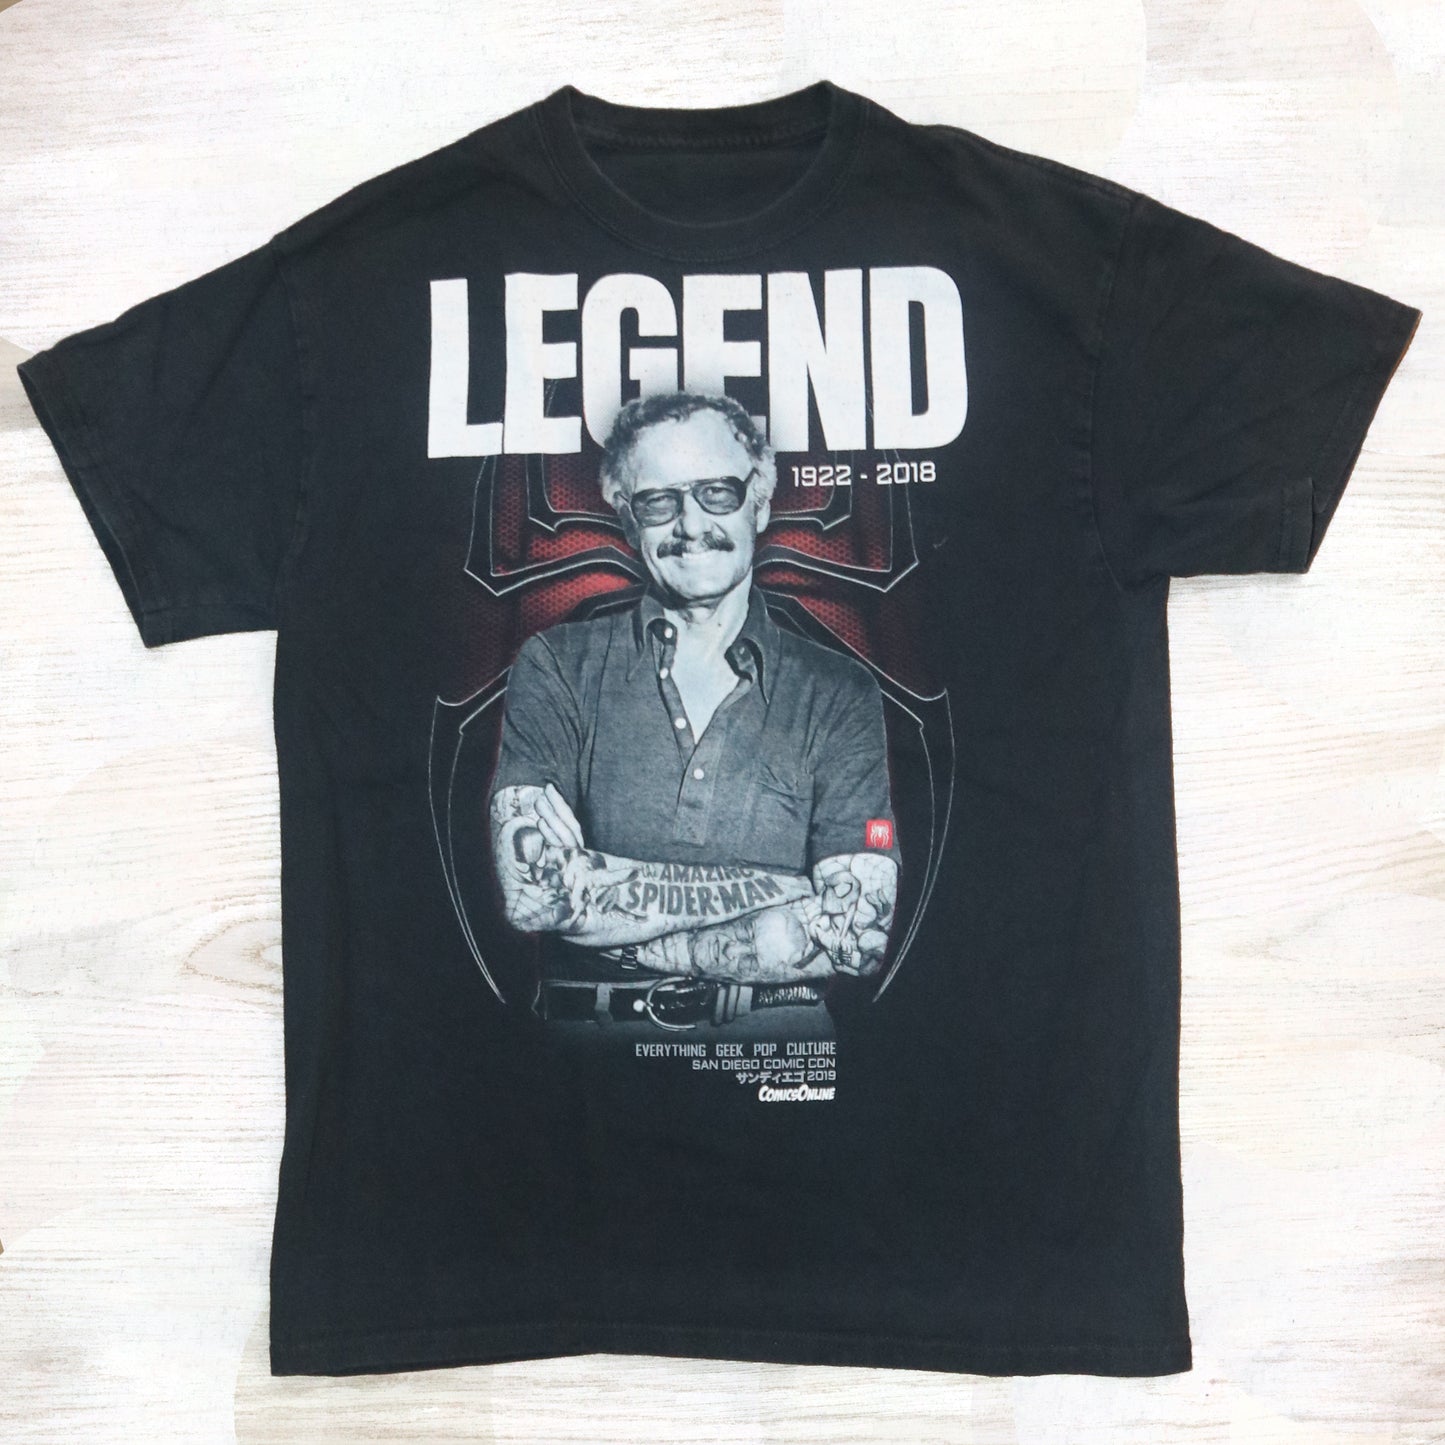 Stan Lee "Legend" Shirt - Rare - Large